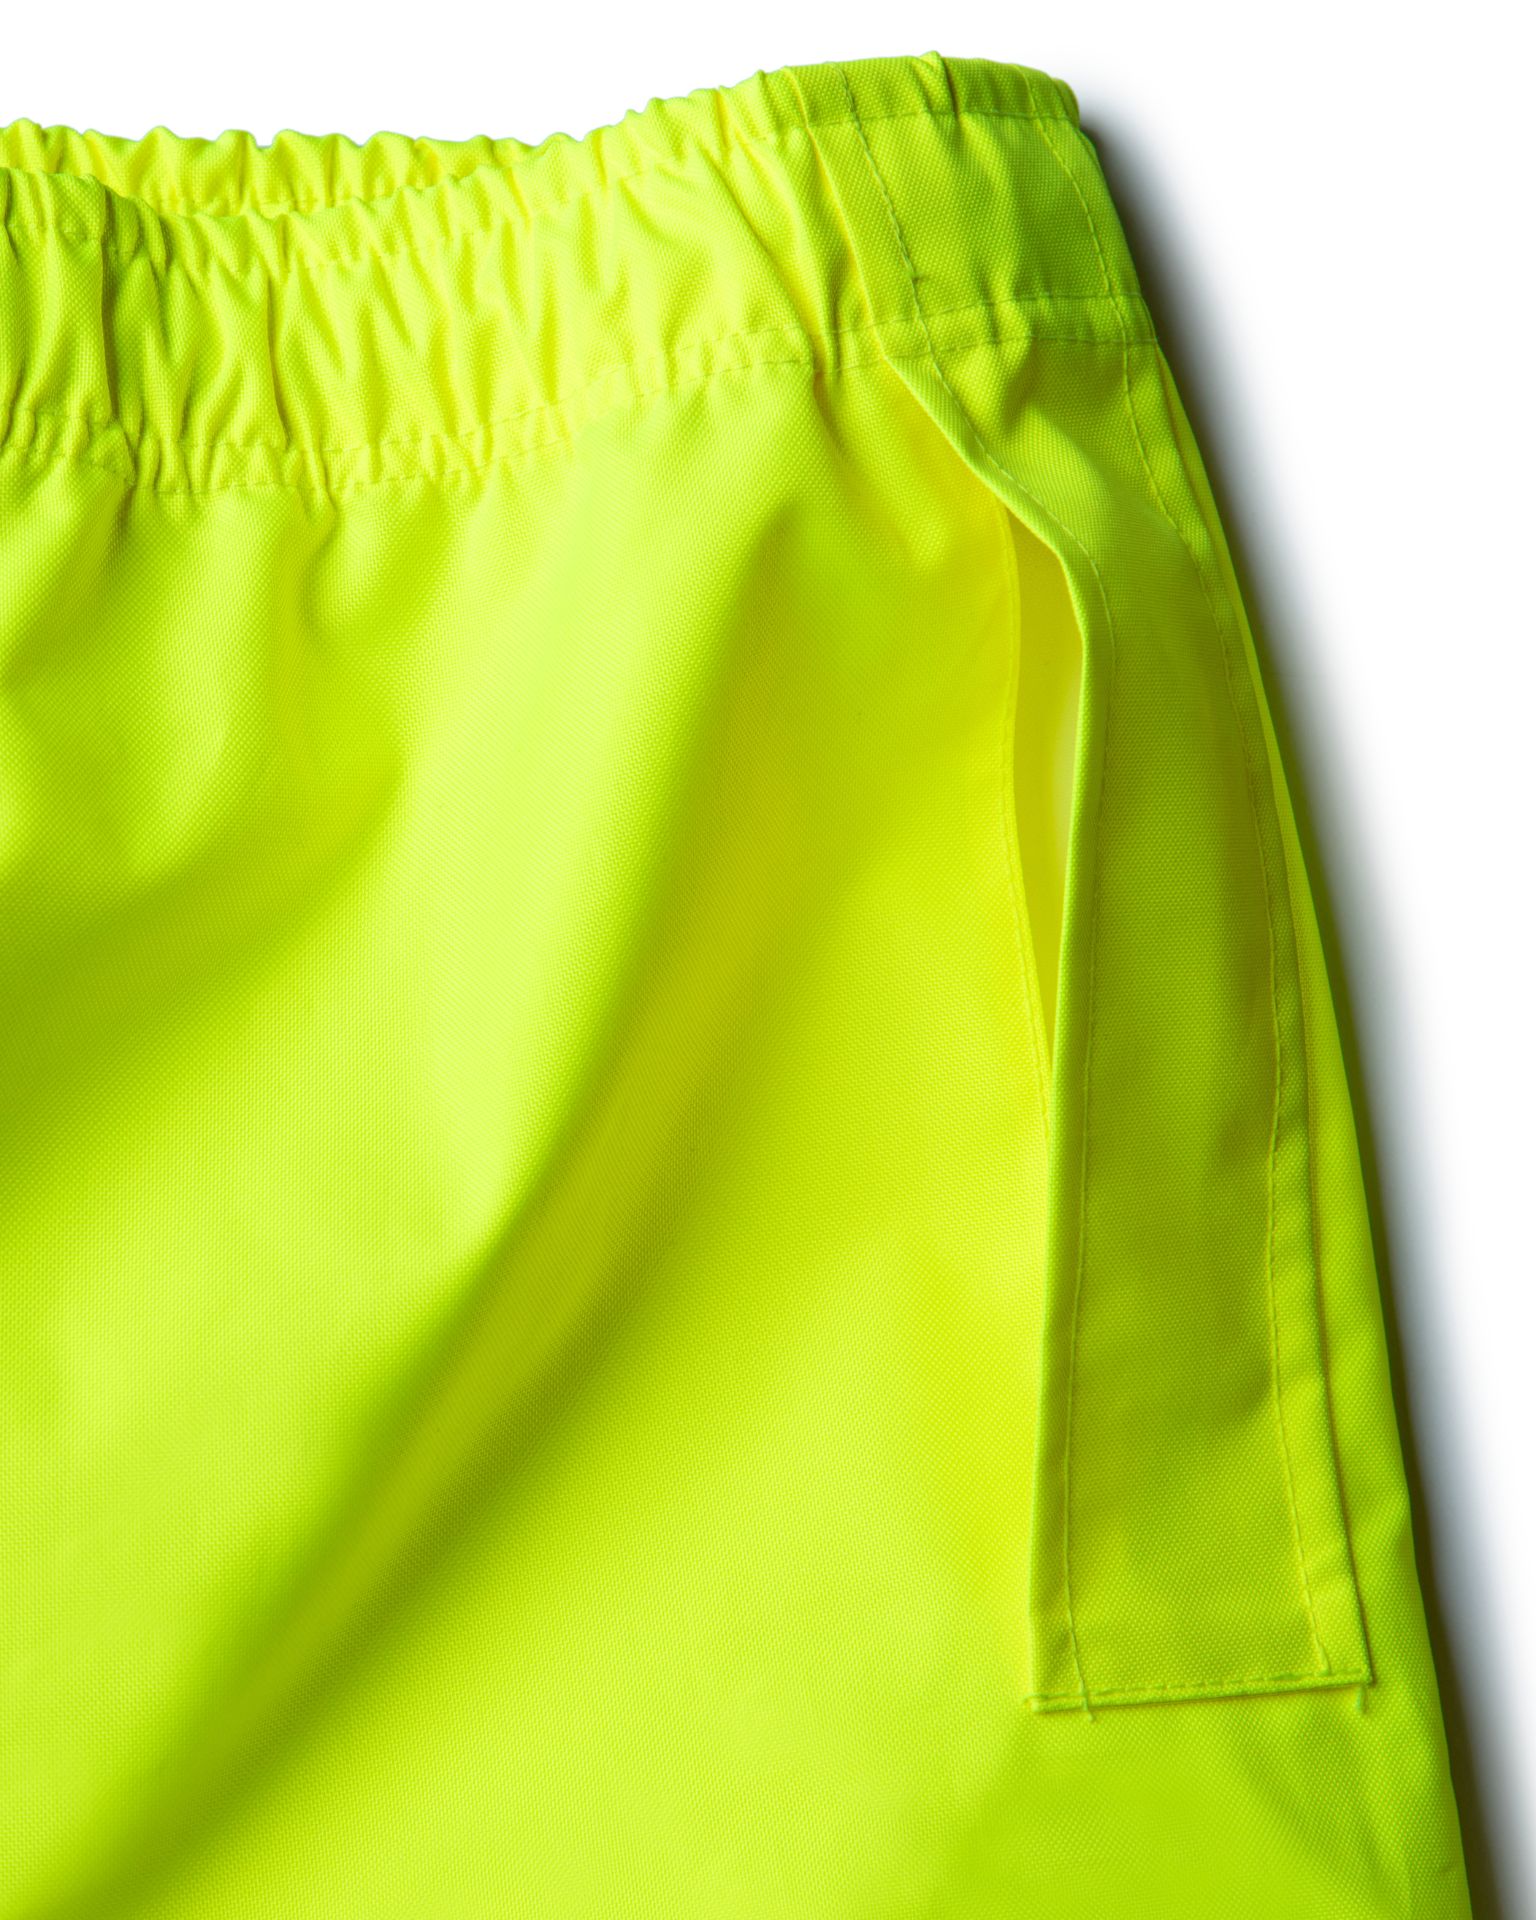 Louisiana Professional Wear Rain Pants: Size 3XL, Black & Fluorescent Yellow, Polyurethane & Nylon - Reversible | Part #910EWTBY3X